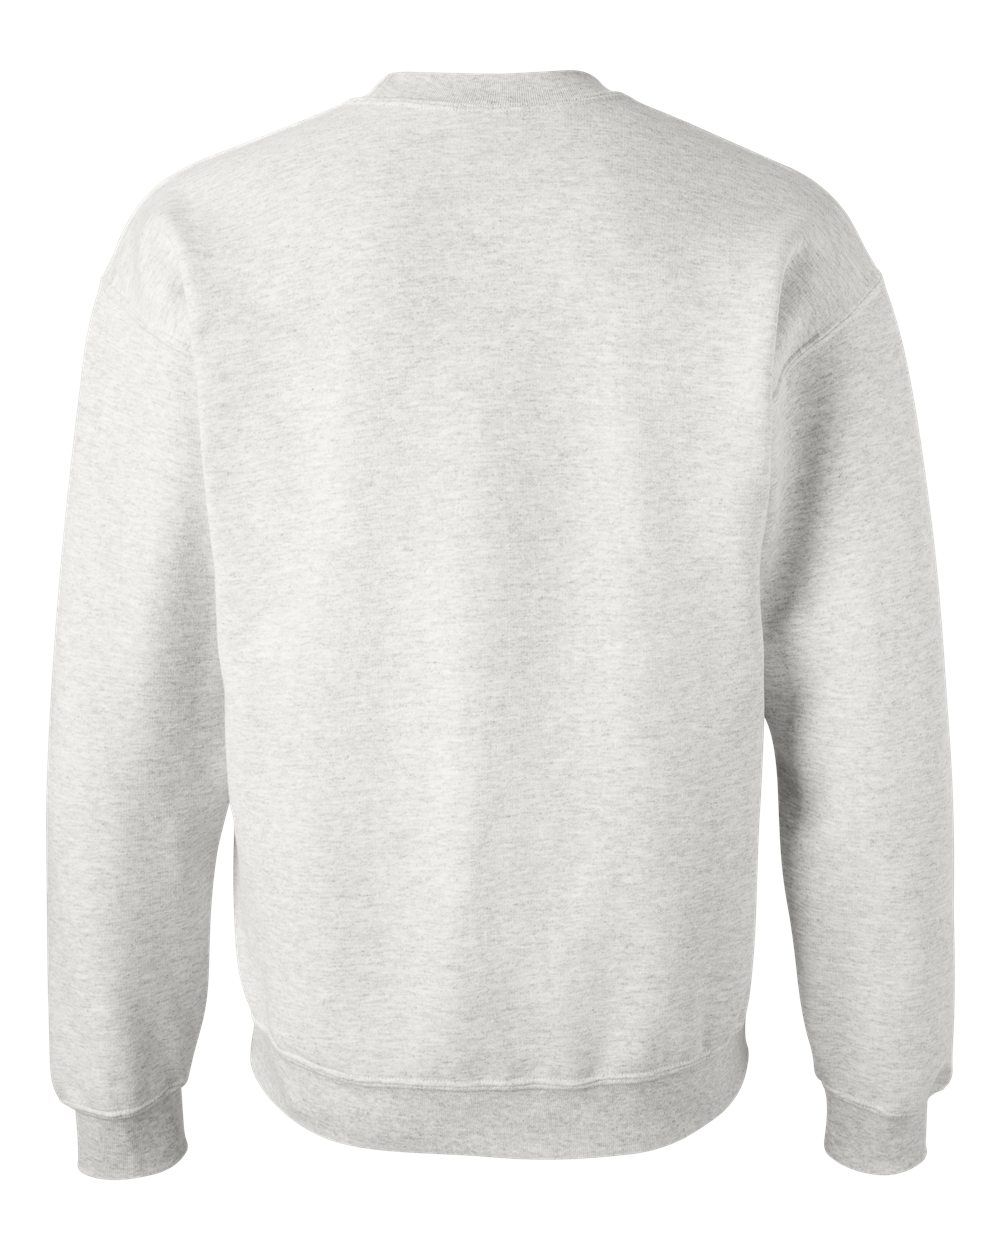 Gildan DryBlend® Crewneck Sweatshirt - image 3 of 5